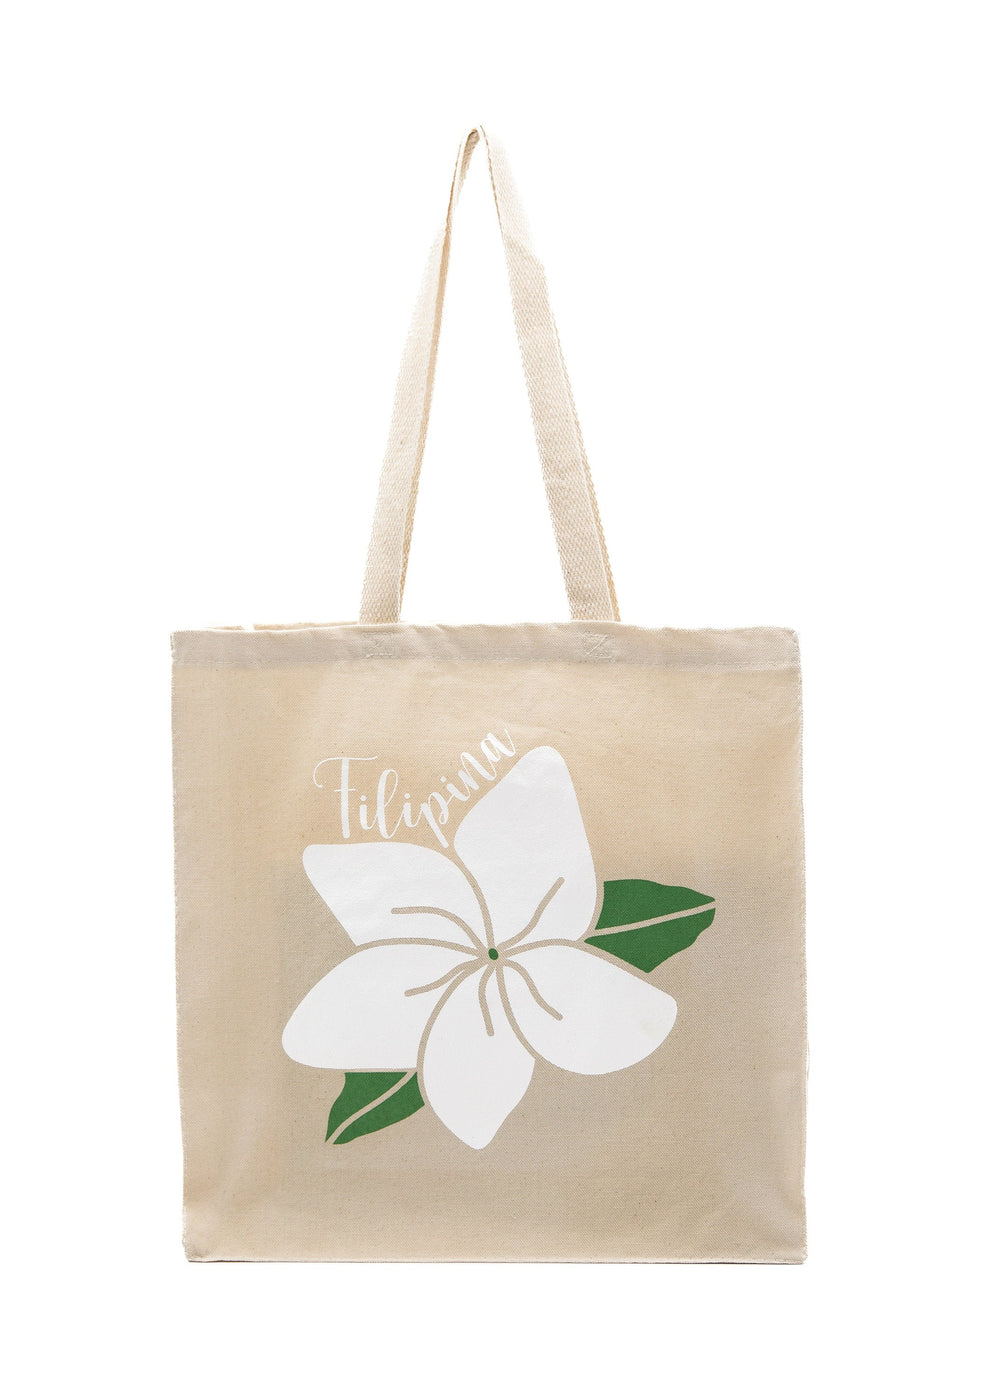 Mie Makes Sampaguita Flower Tote Bags, Filipino Tote Bags, Filipina, Shopping Bag, 14x15 Tote Bag, Tan/Sand